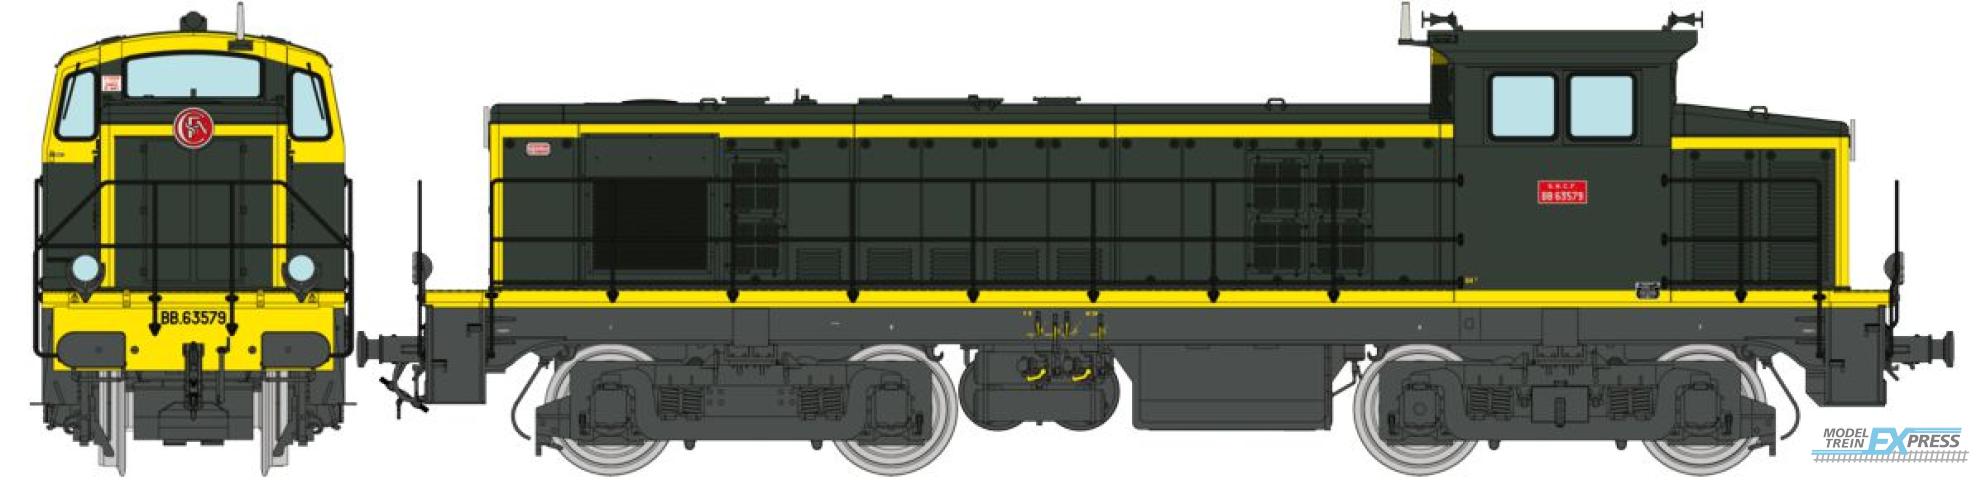 REE models JM-009SAC Diesel Locomotive BB 63579 green/yellow 401 grey frame, Era IV - AC SOUND 3 Rails AC